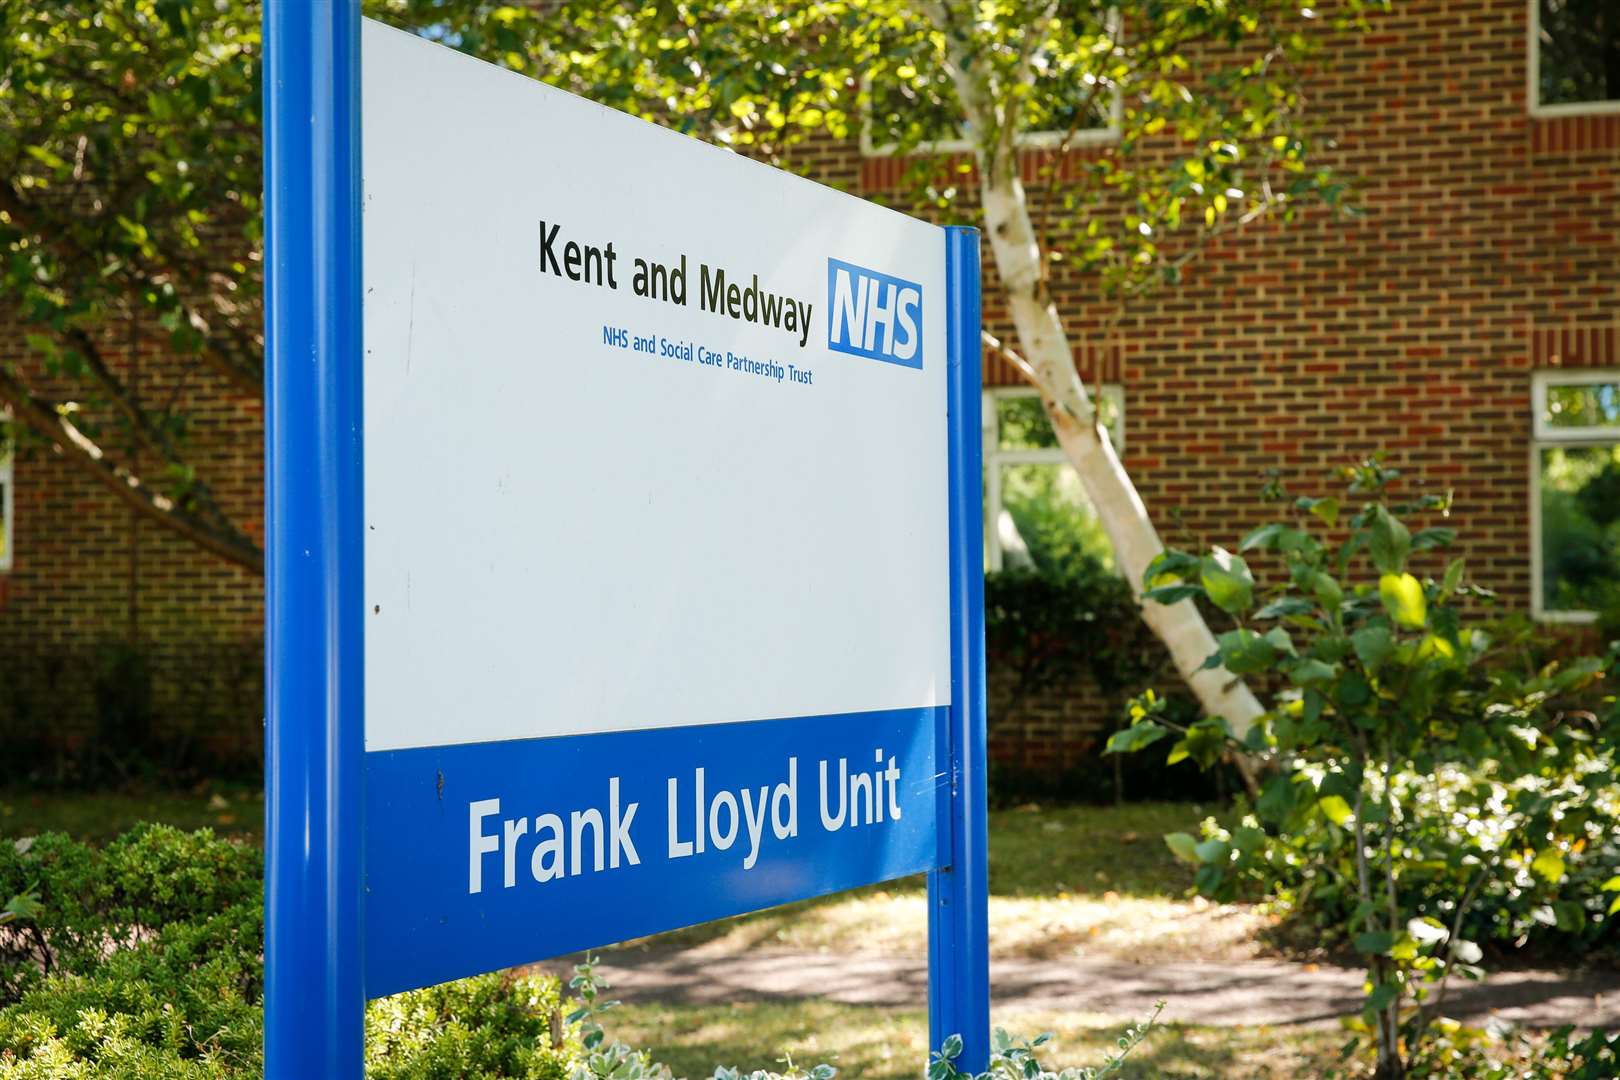 Frank Lloyd Dementia Unit at Sittingbourne Memorial Hospital. Picture: Matthew Walker